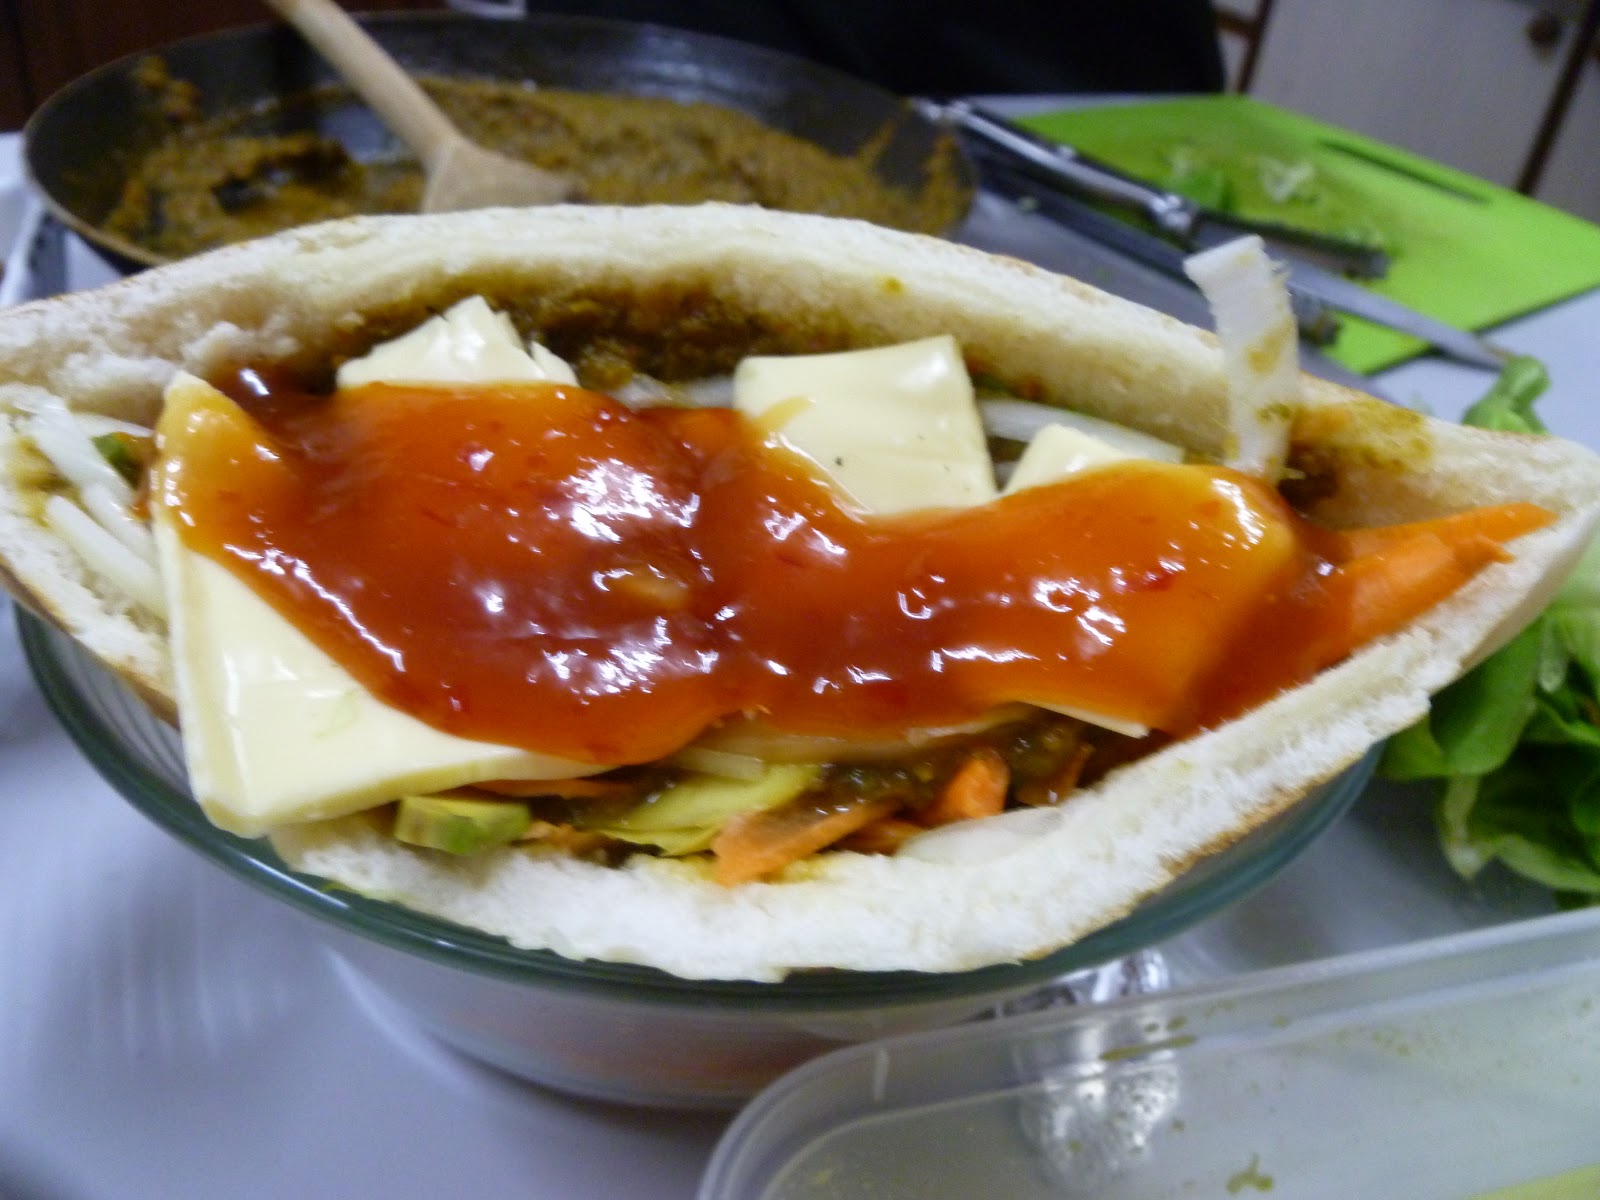 Food at Home: Sandwich roti pita